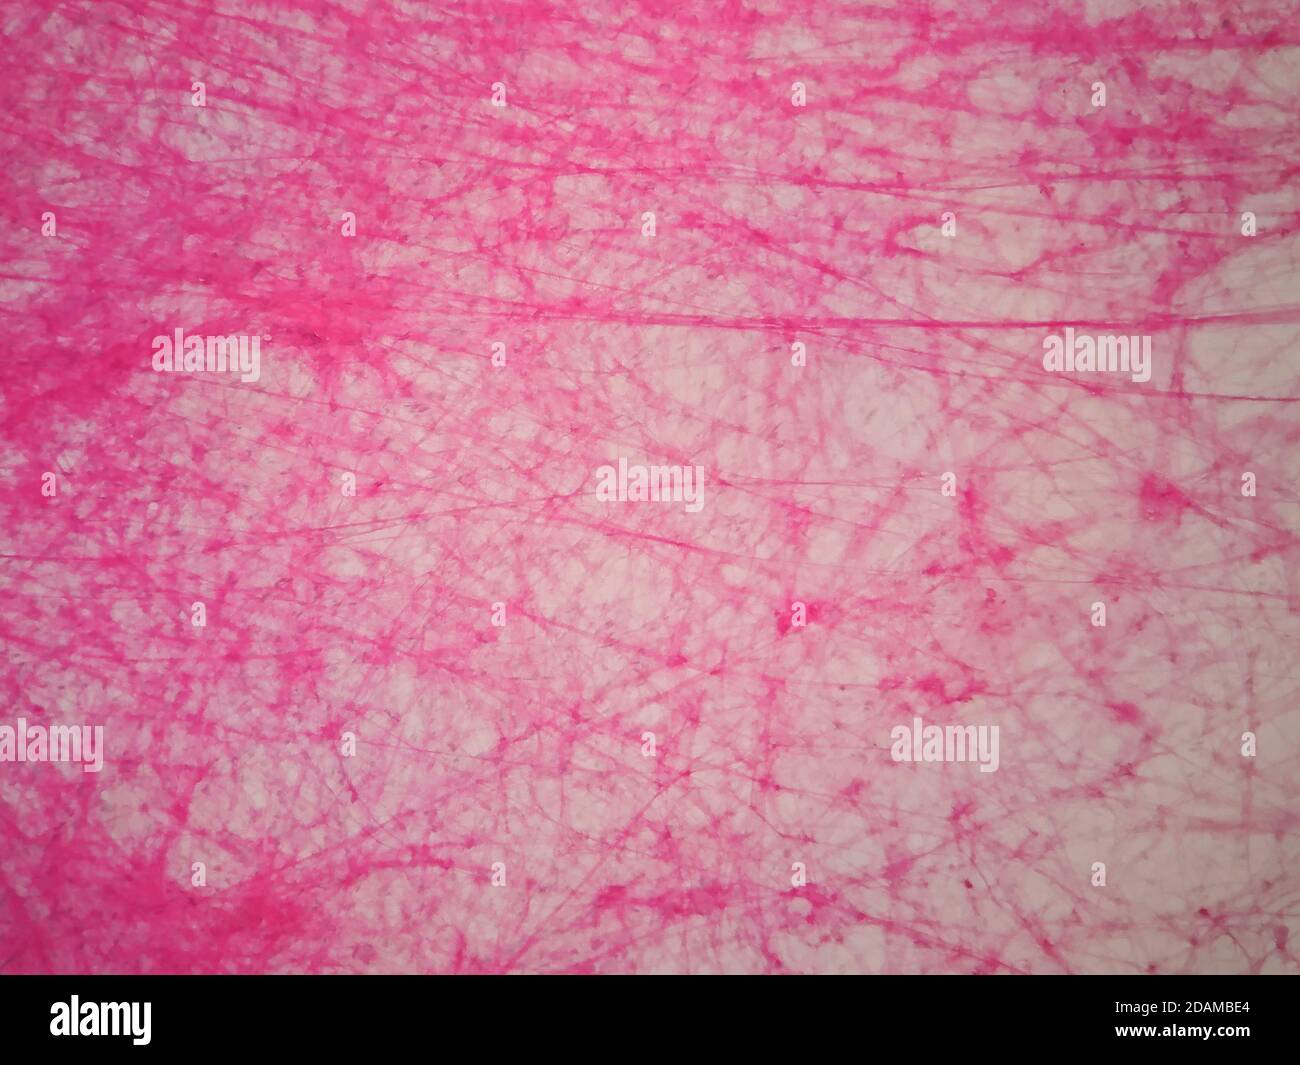 Tessuto areolare umano, micrografia leggera. Foto Stock